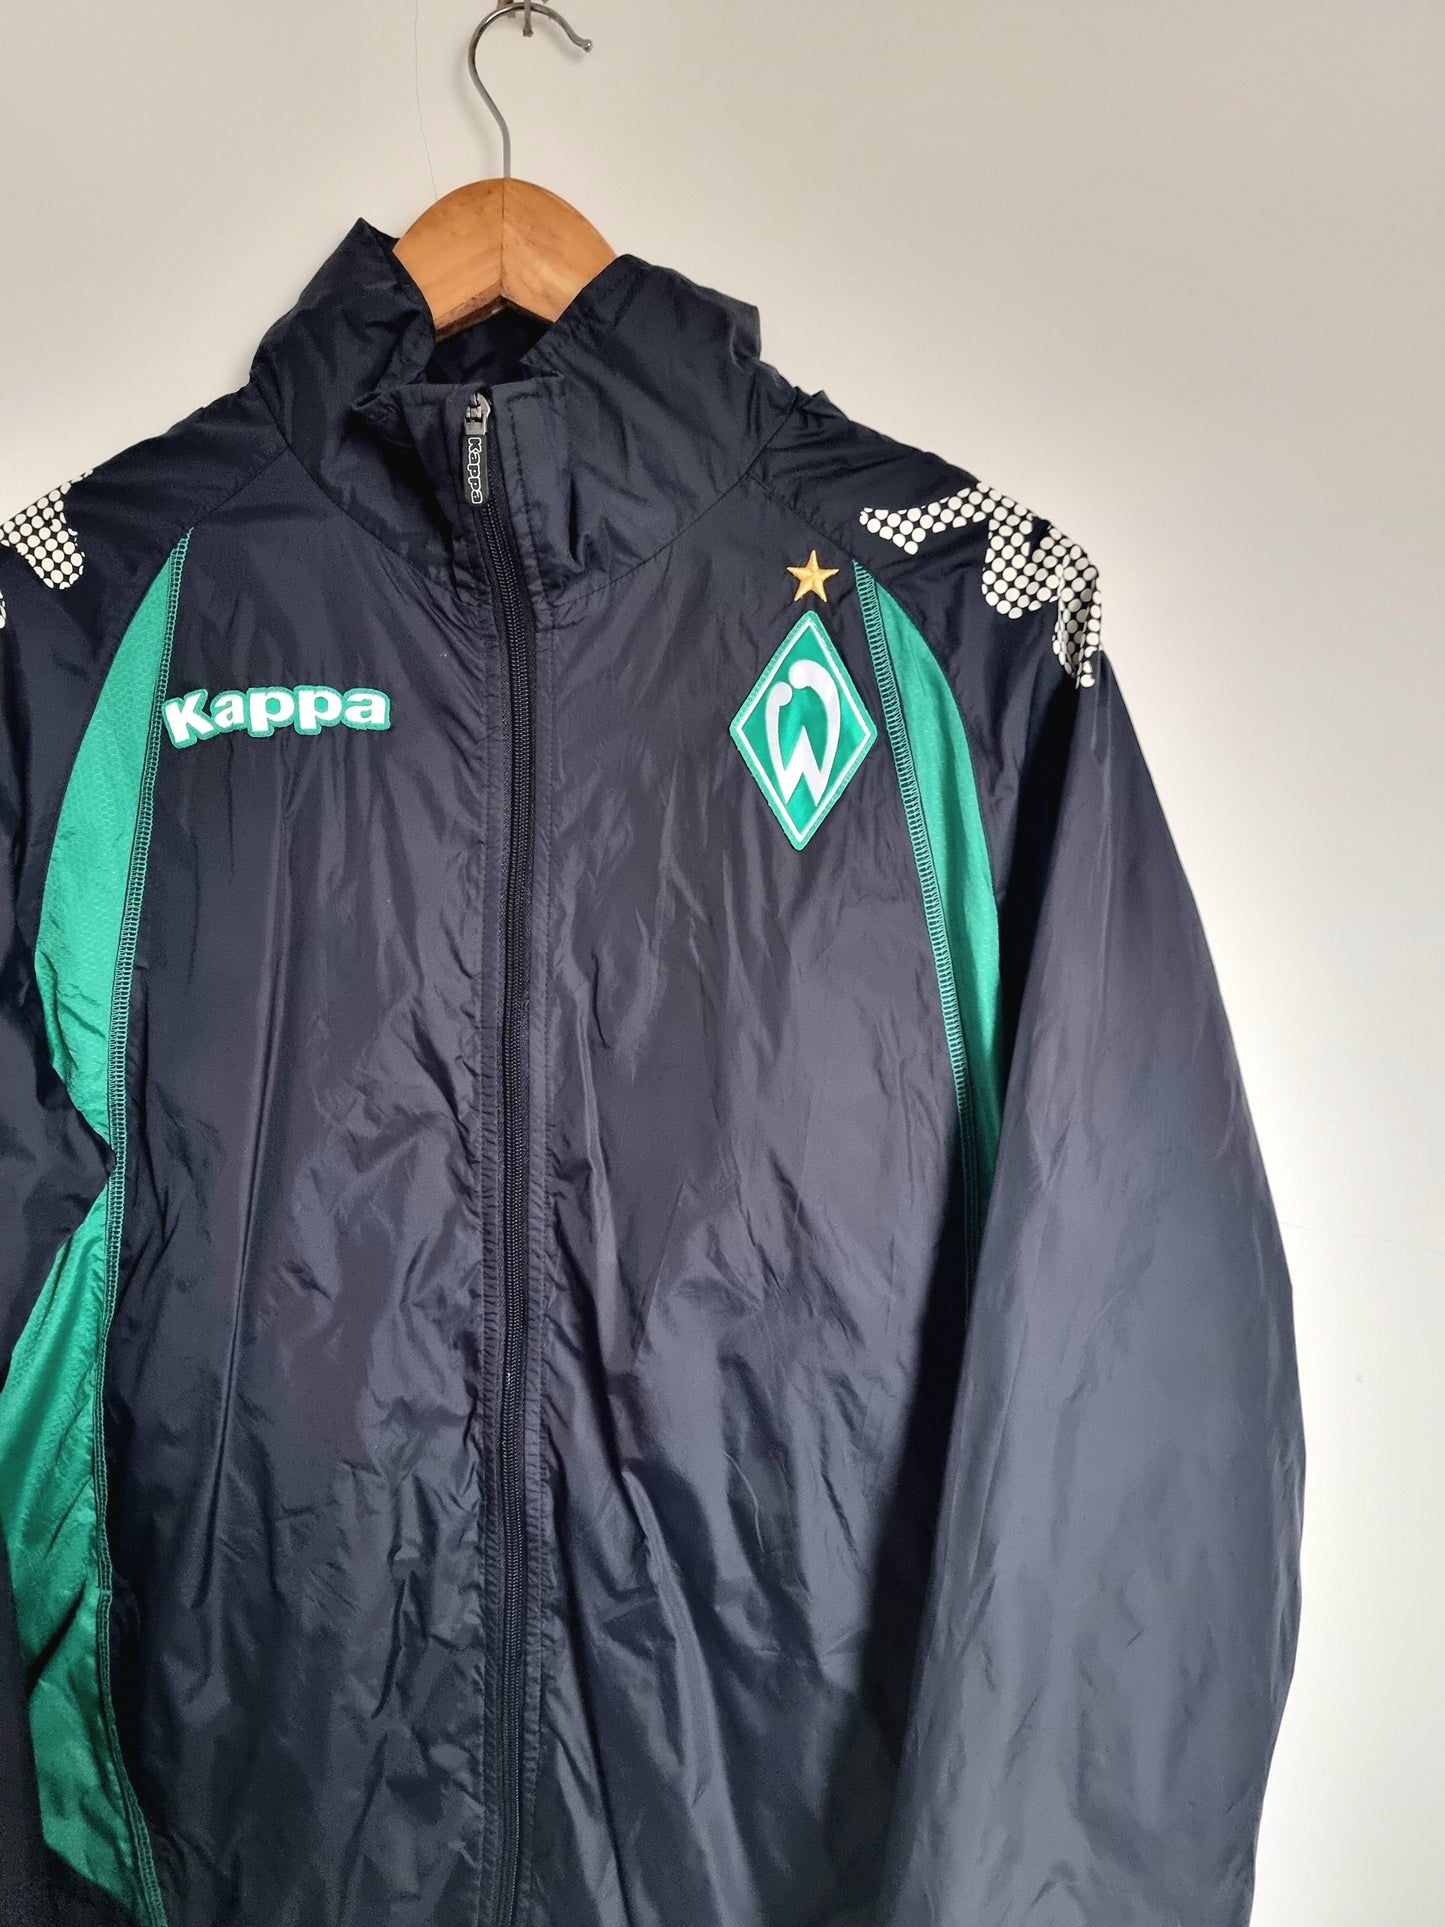 Kappa Werder Bremen 08/09 Windbreaker Training Jacket Medium